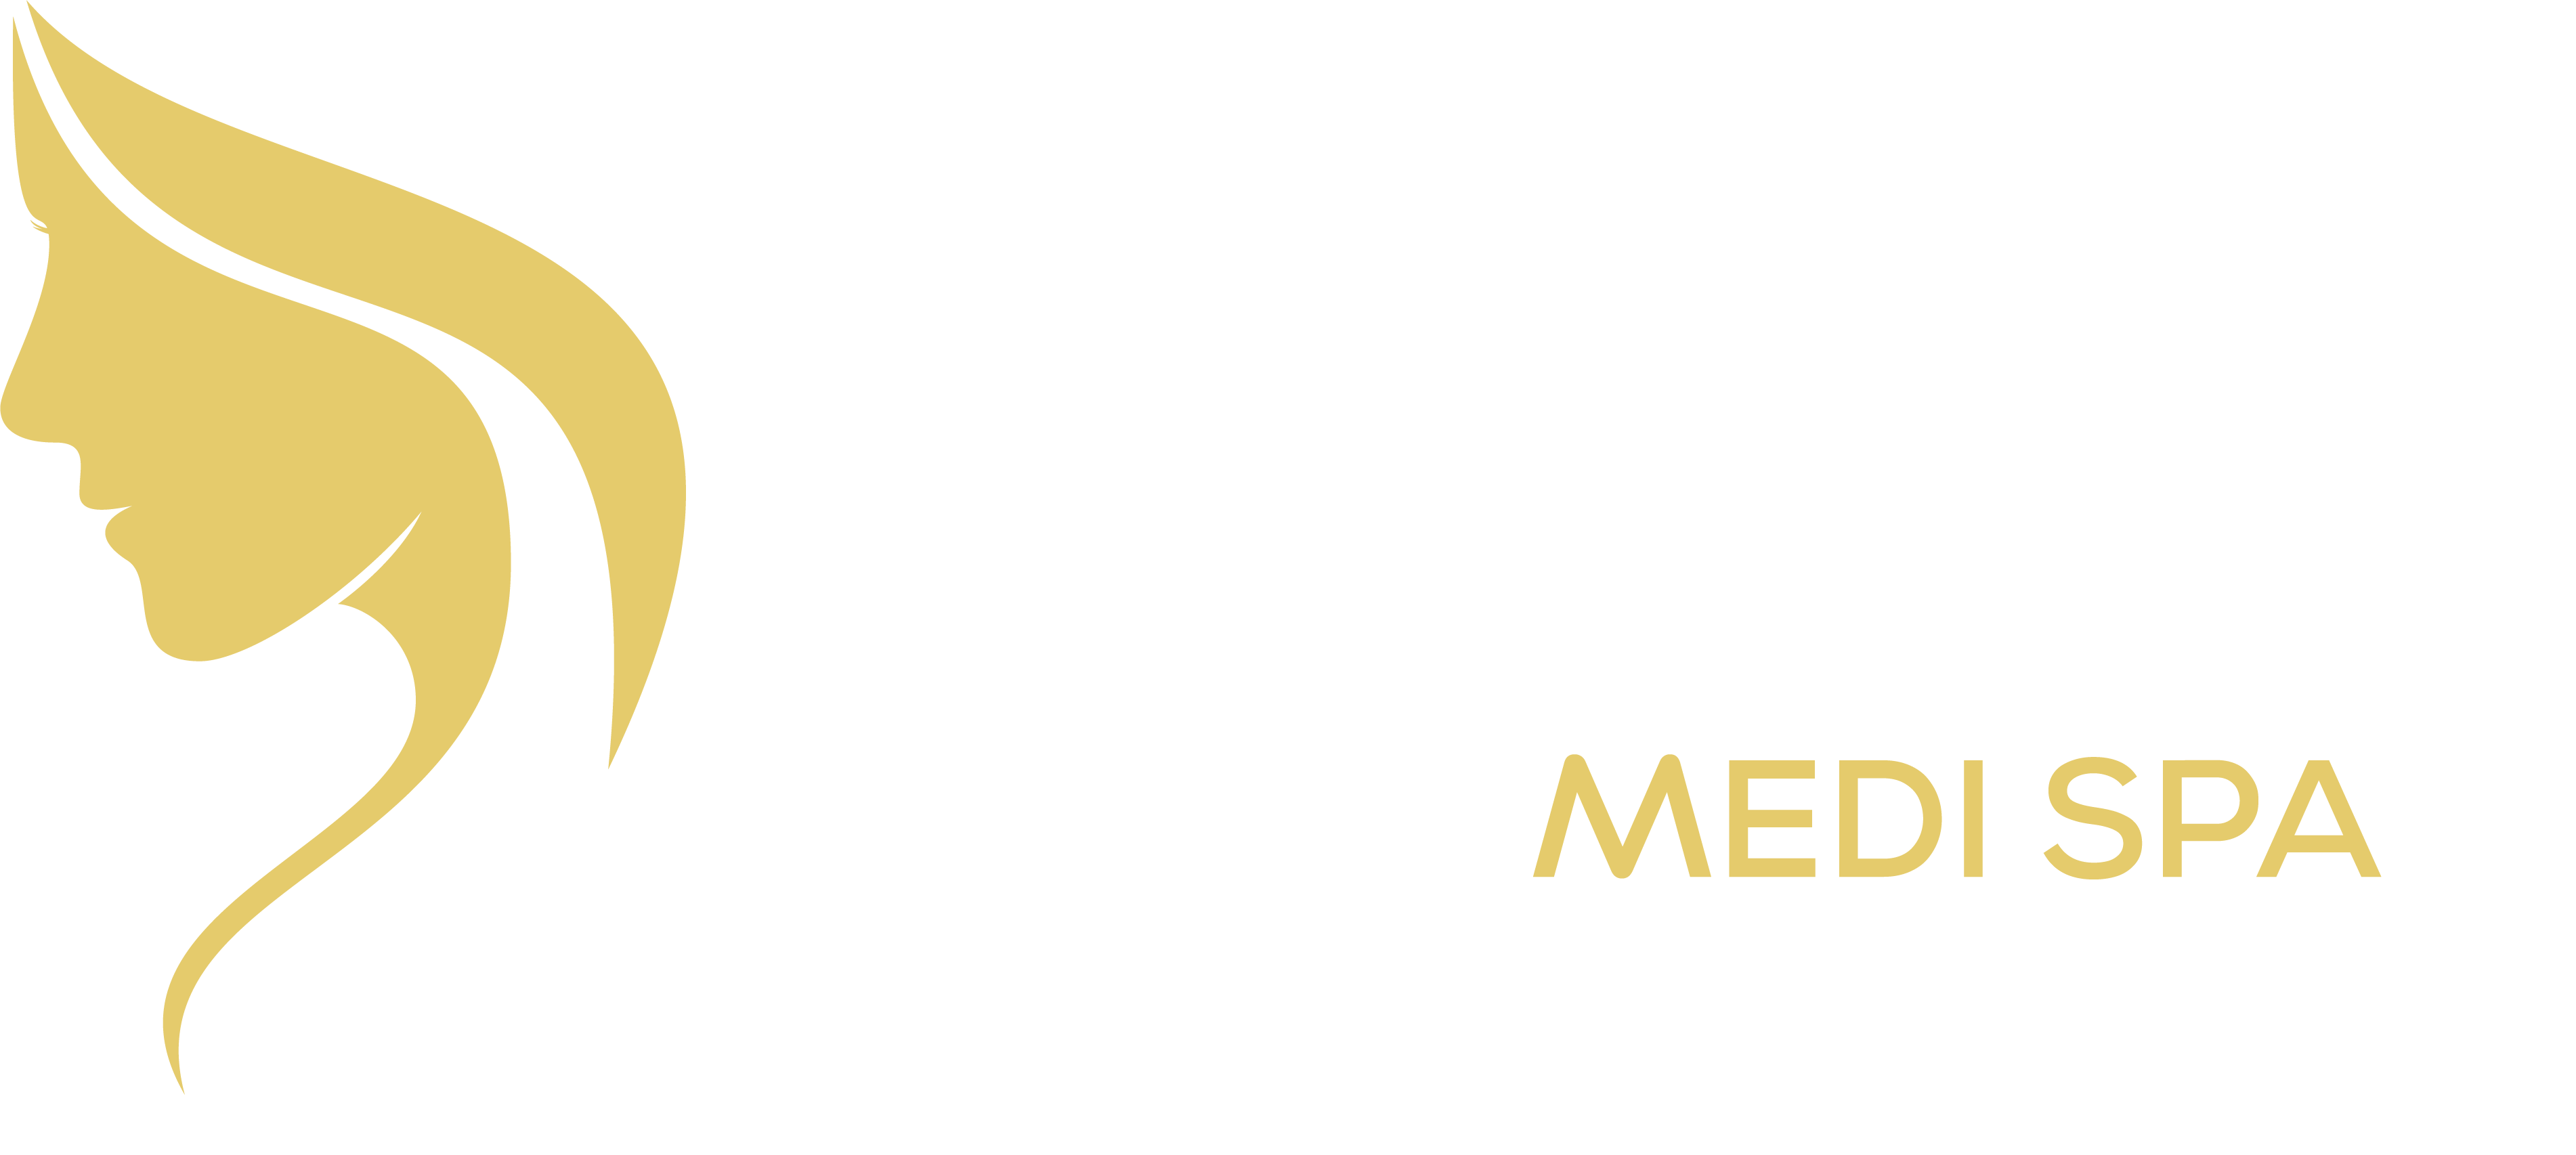 karisma logo v1